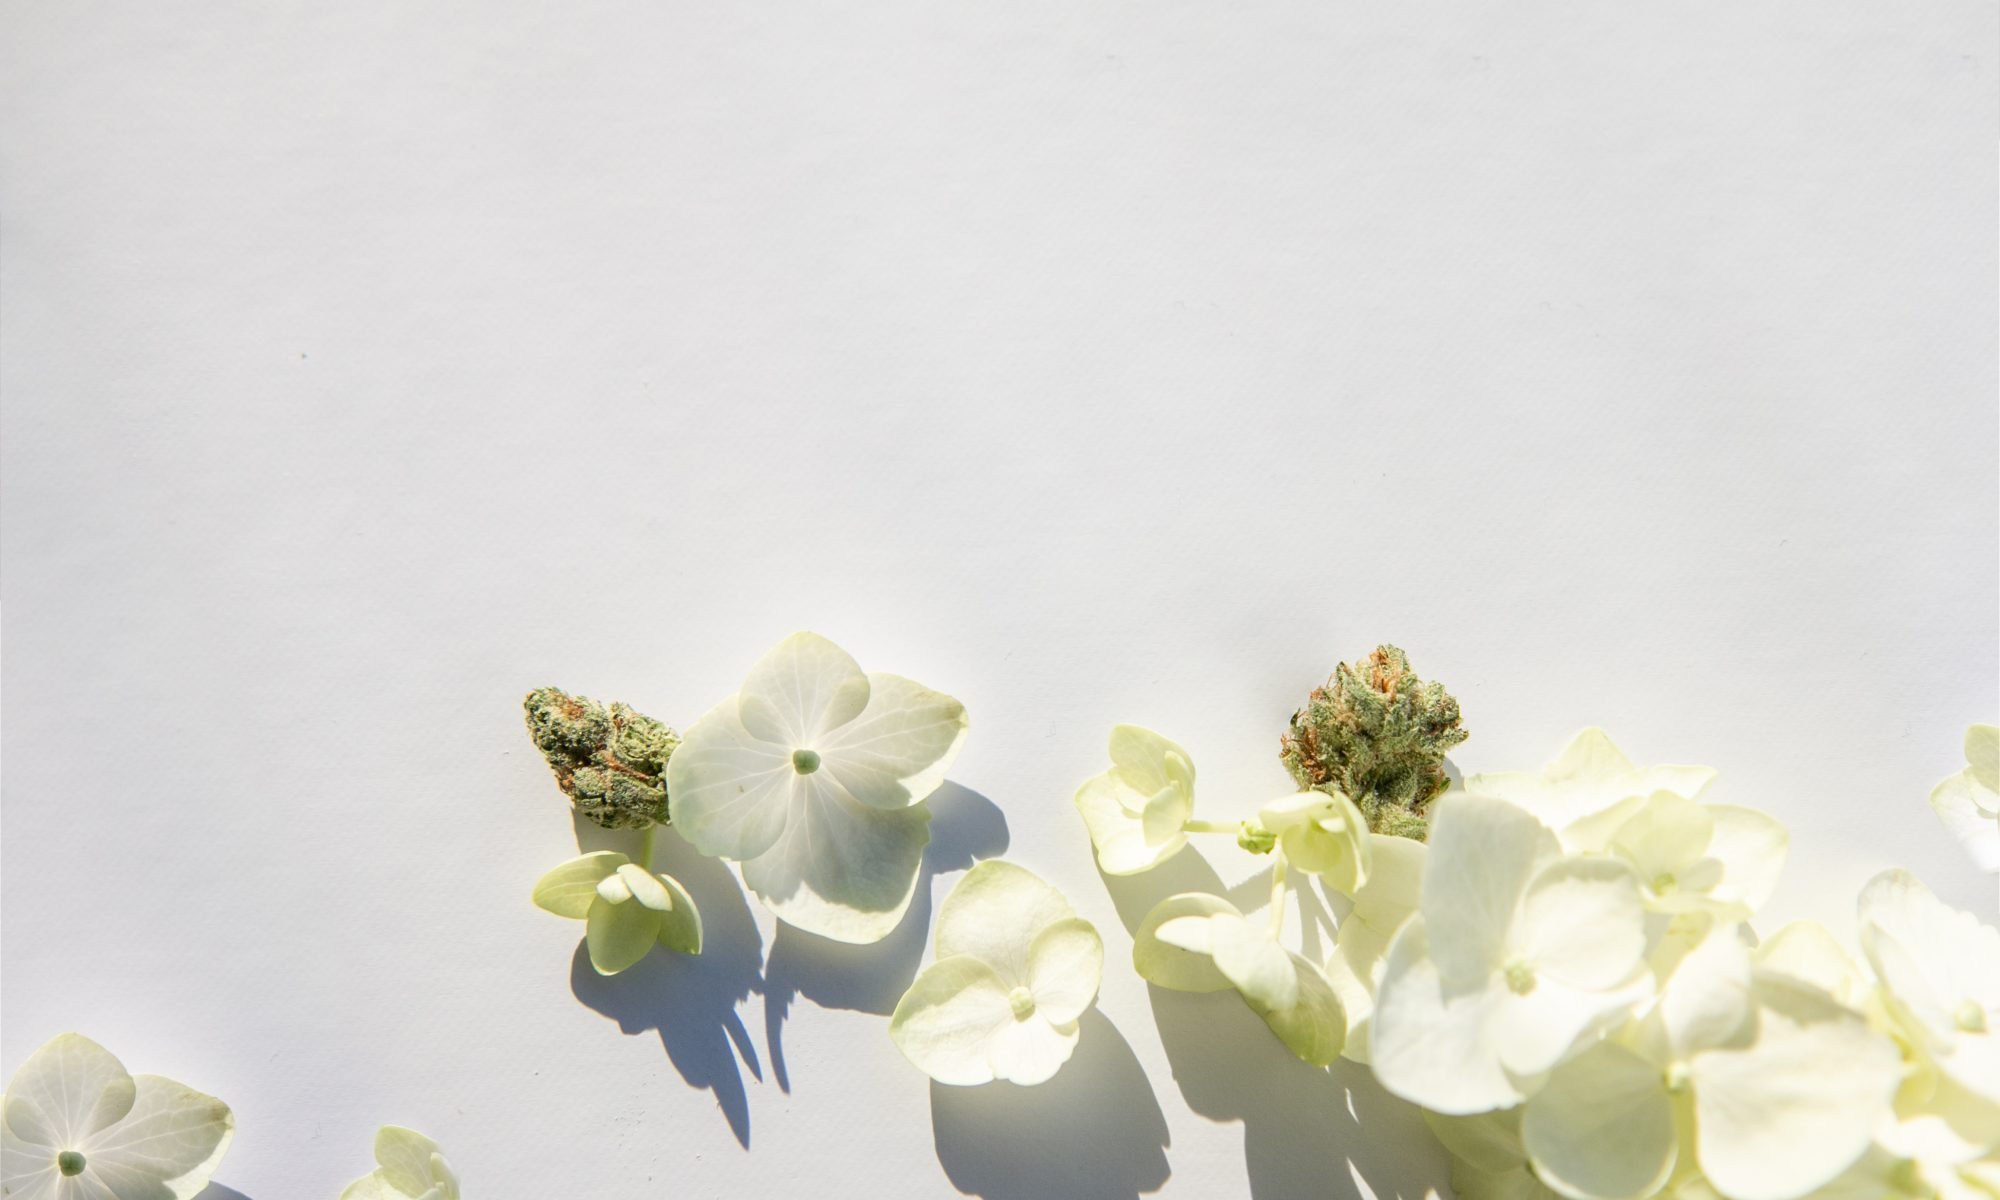 By The Cannabiz Agency cannabis flower scaled